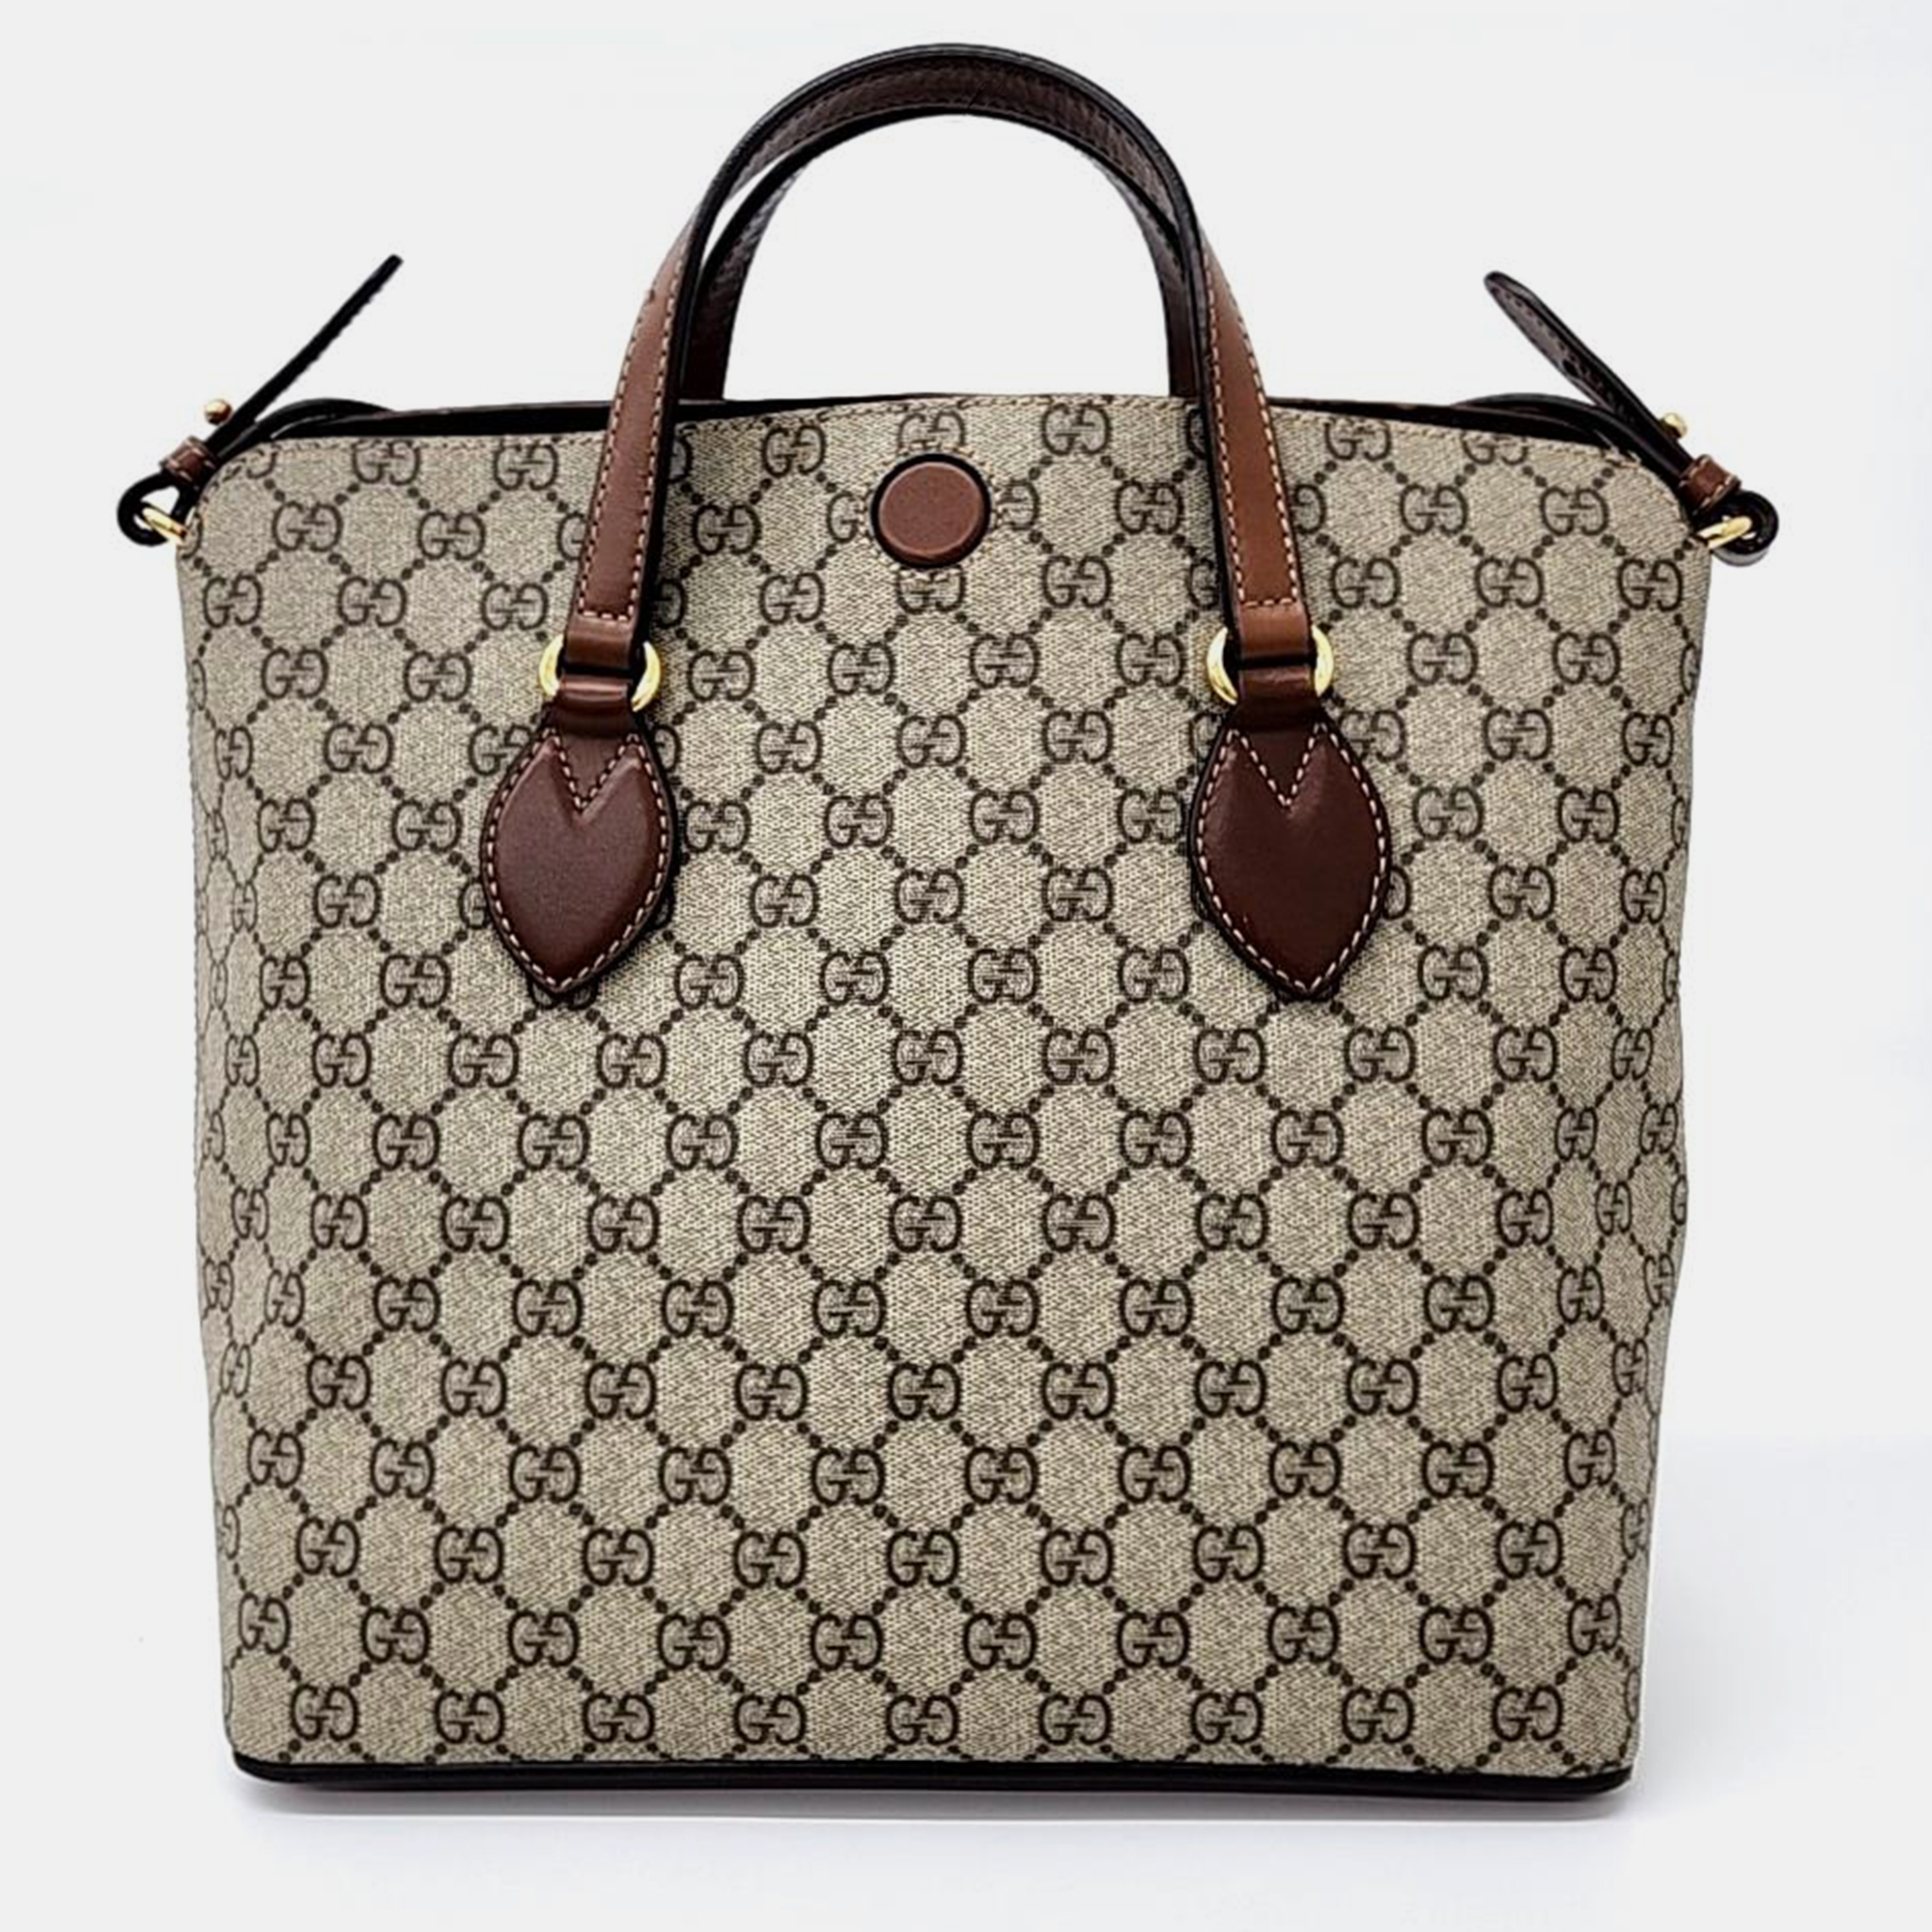 Gucci supreme tote and shoulder bag (429147)